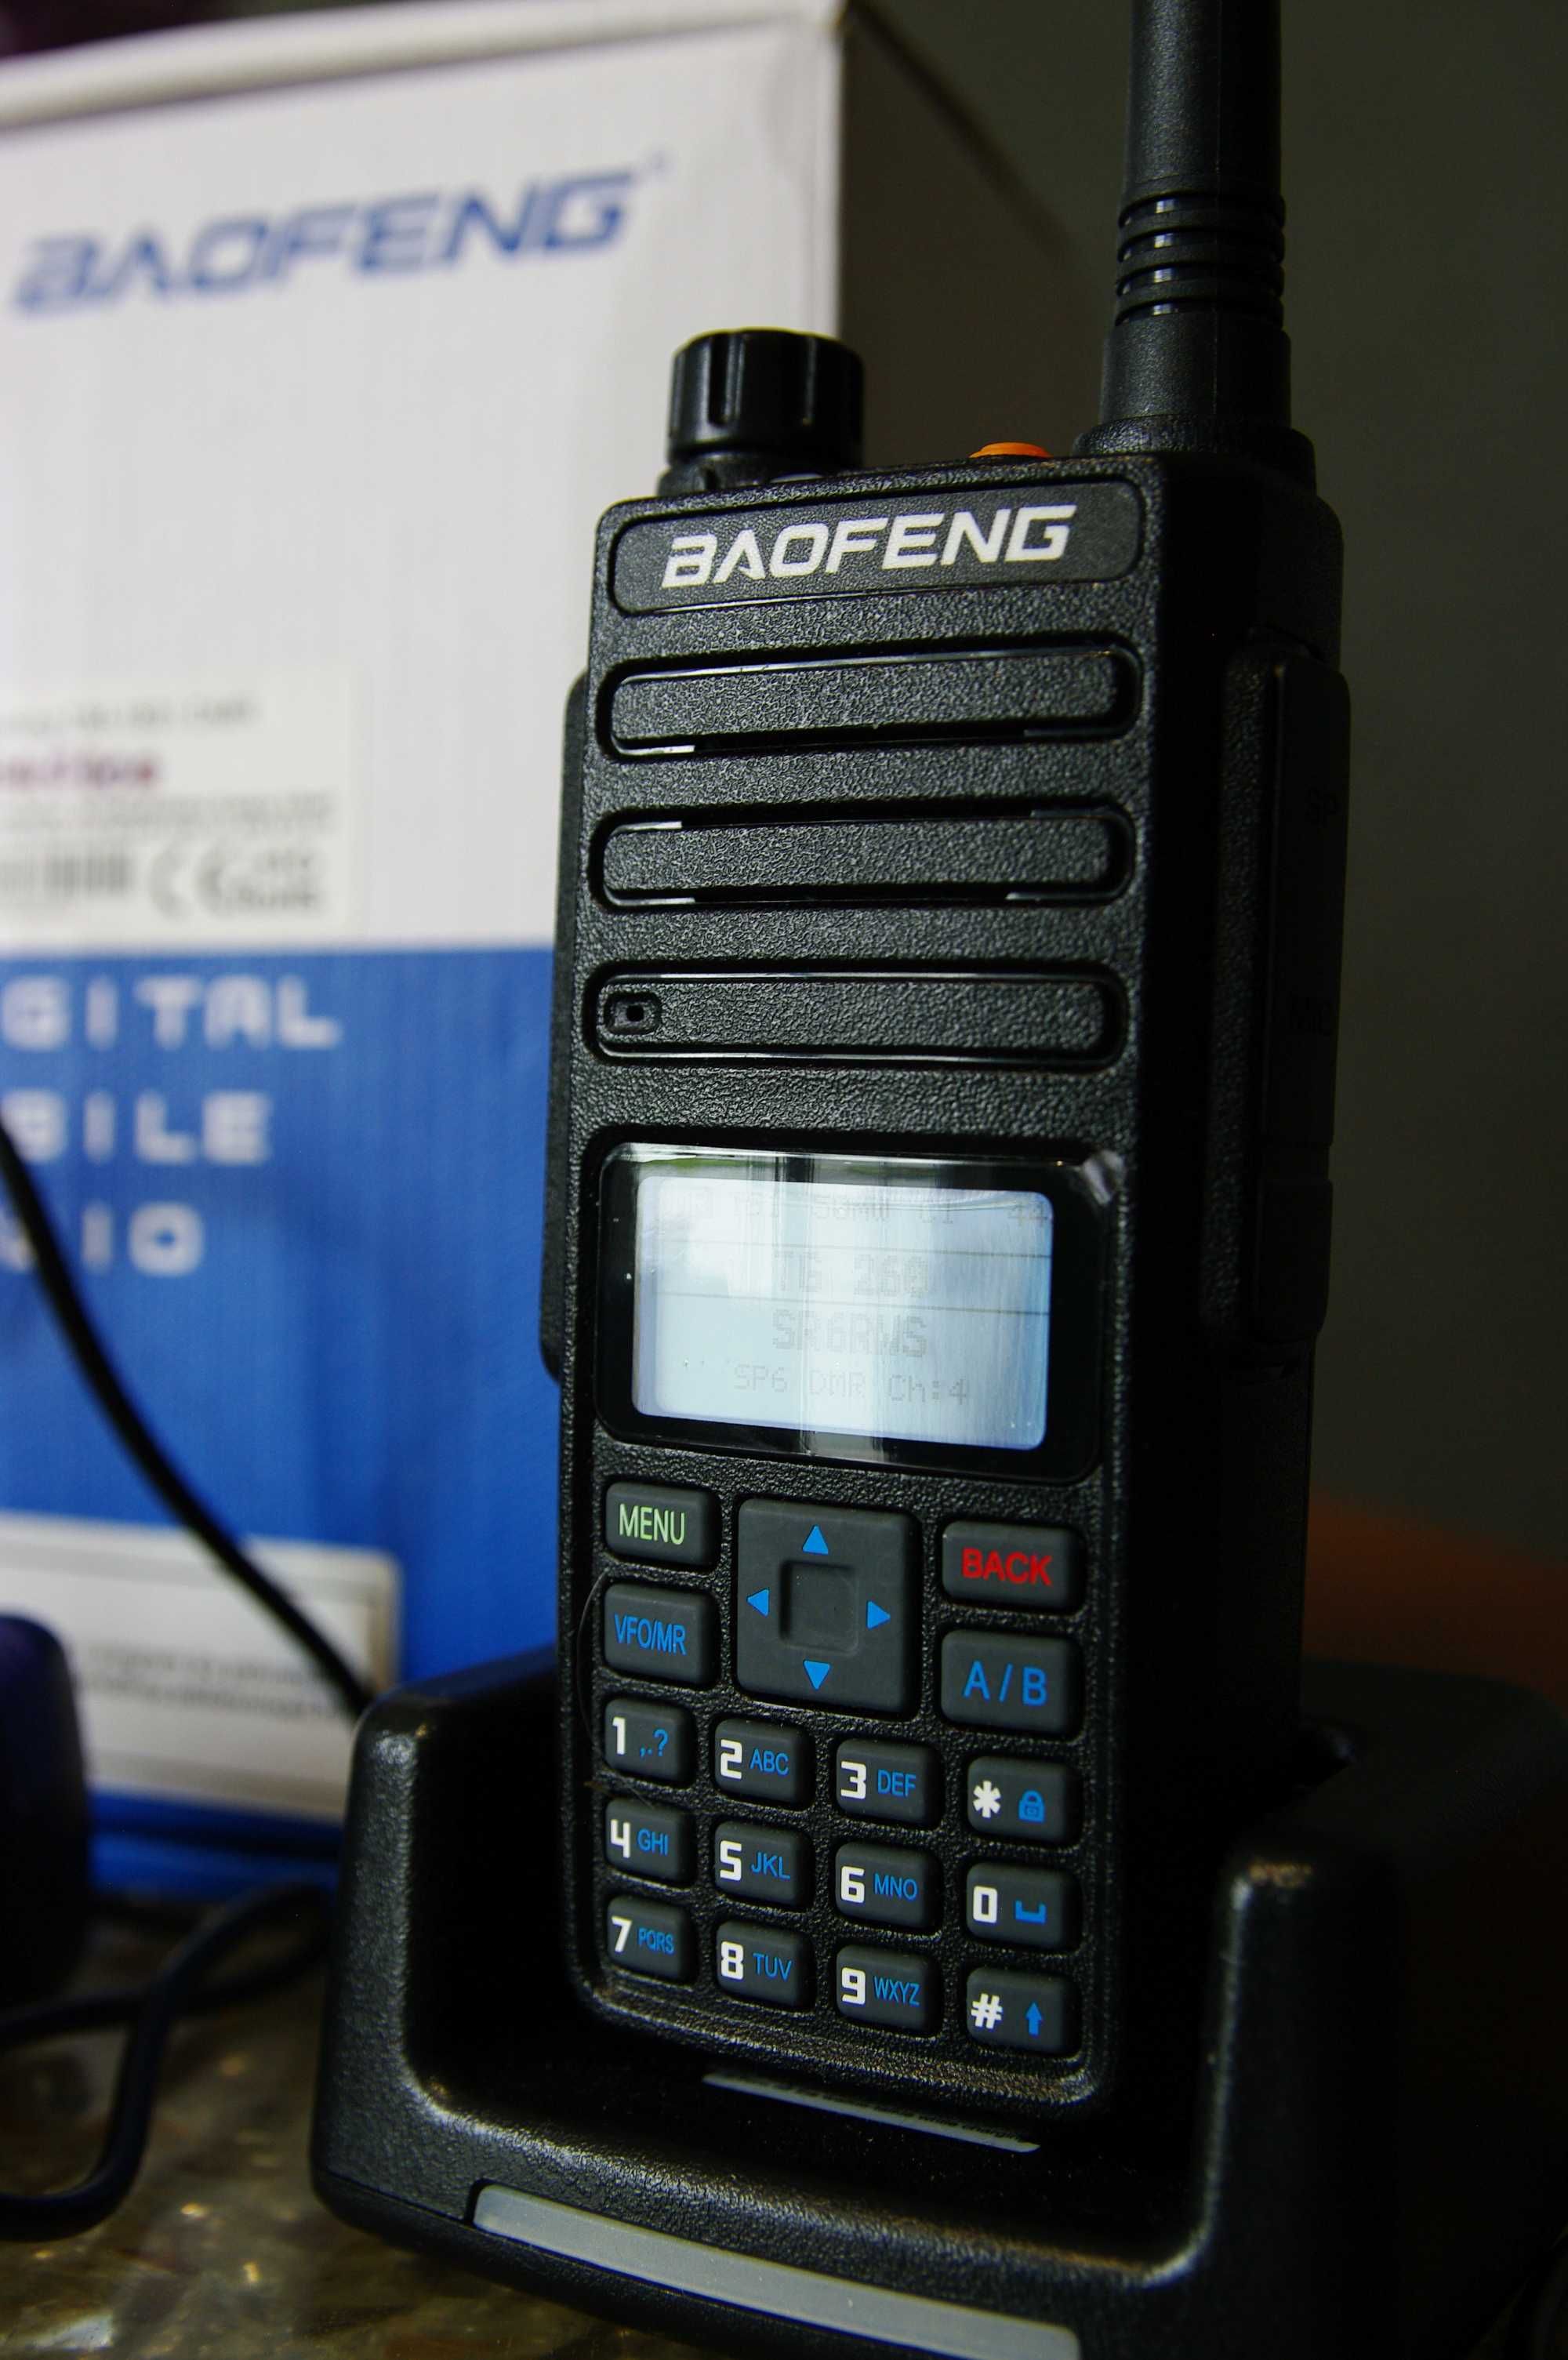 Radiotelefon Baofeng dm-1801 opengd77